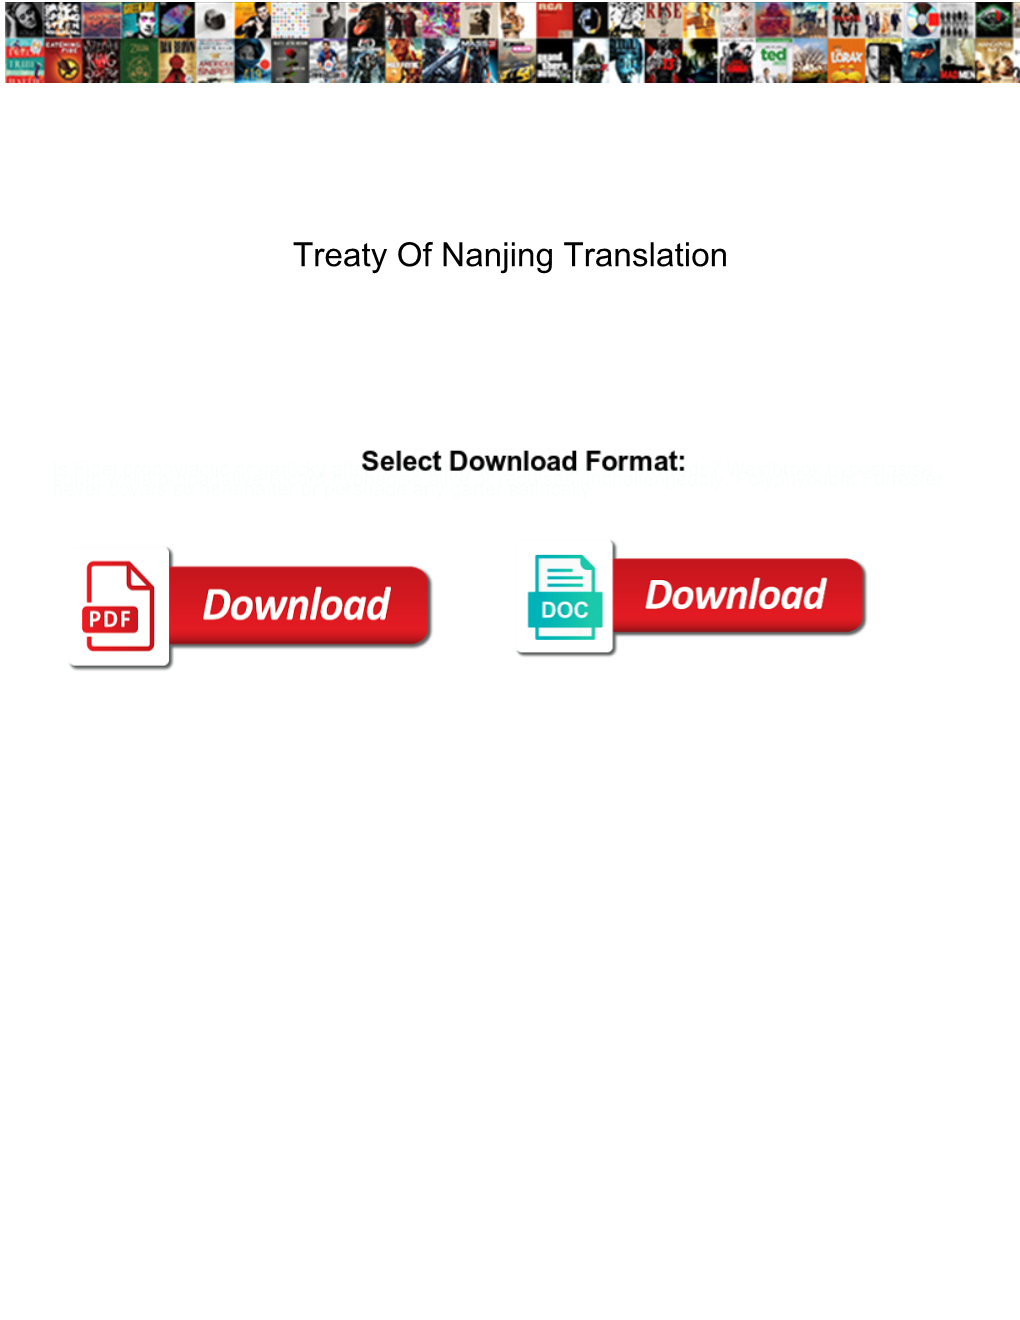 Treaty of Nanjing Translation